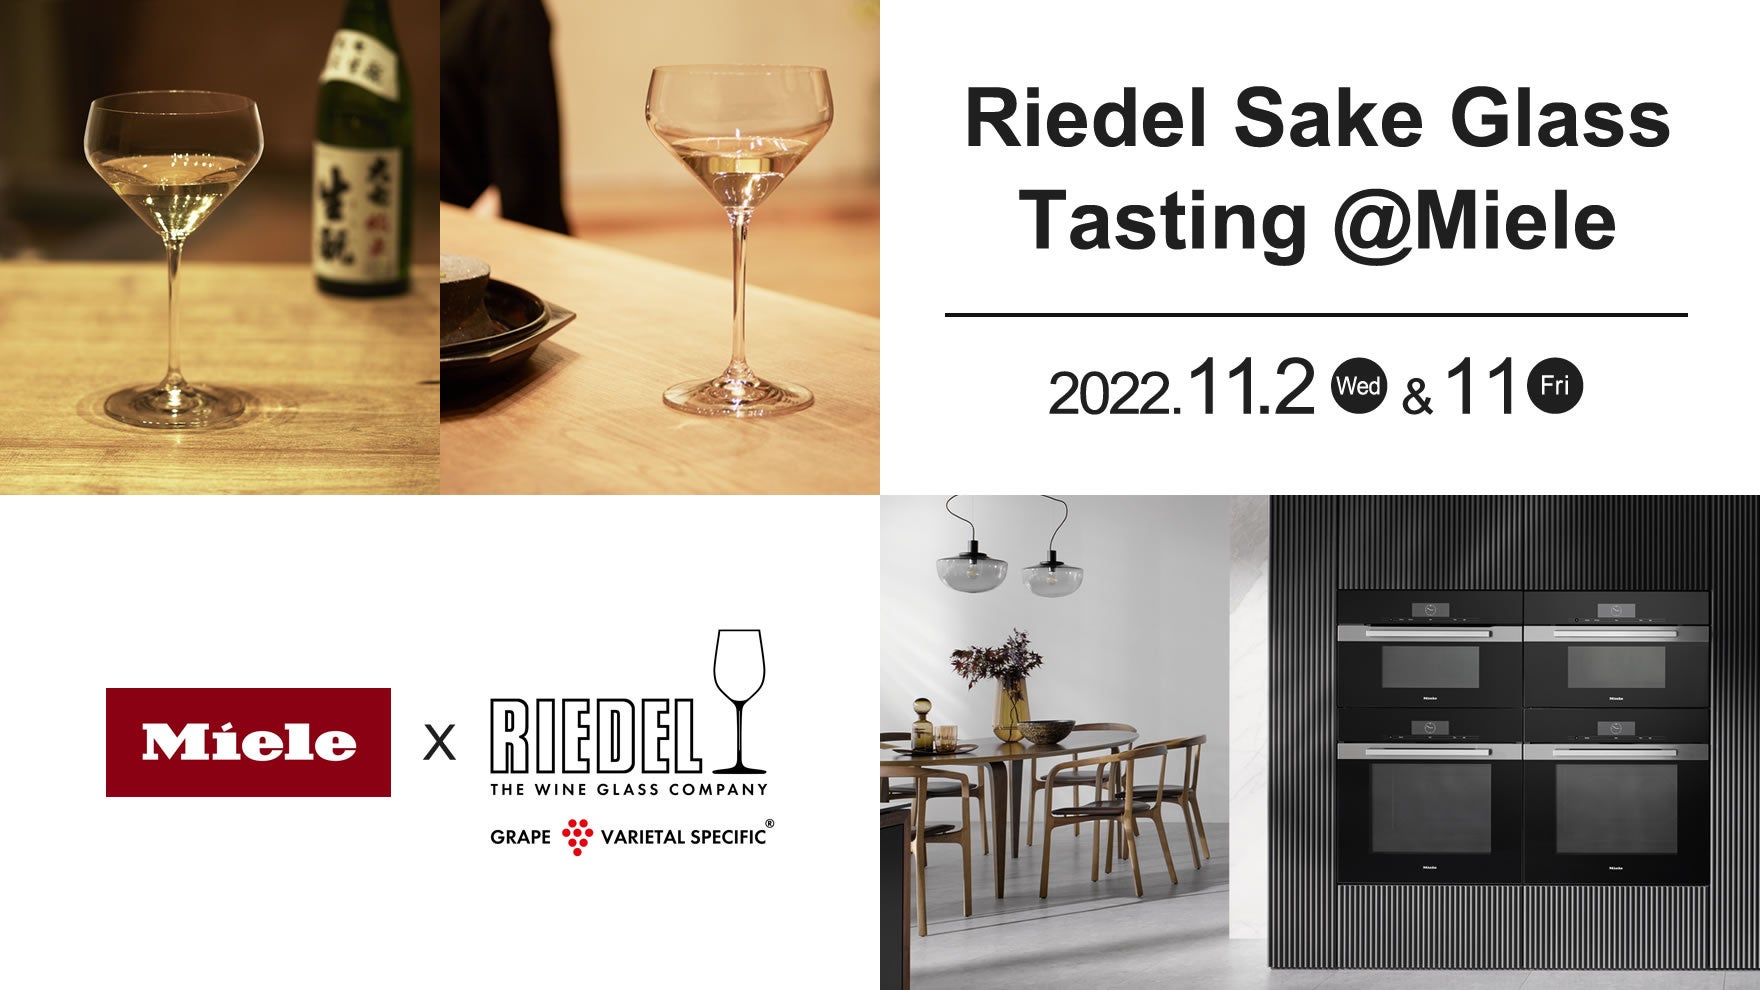 Mieleで創る和食が愉しめるRiedel×Mieleのコラボレーションイベント「Riedel Sake Glass テイスティング @Miele」を開催